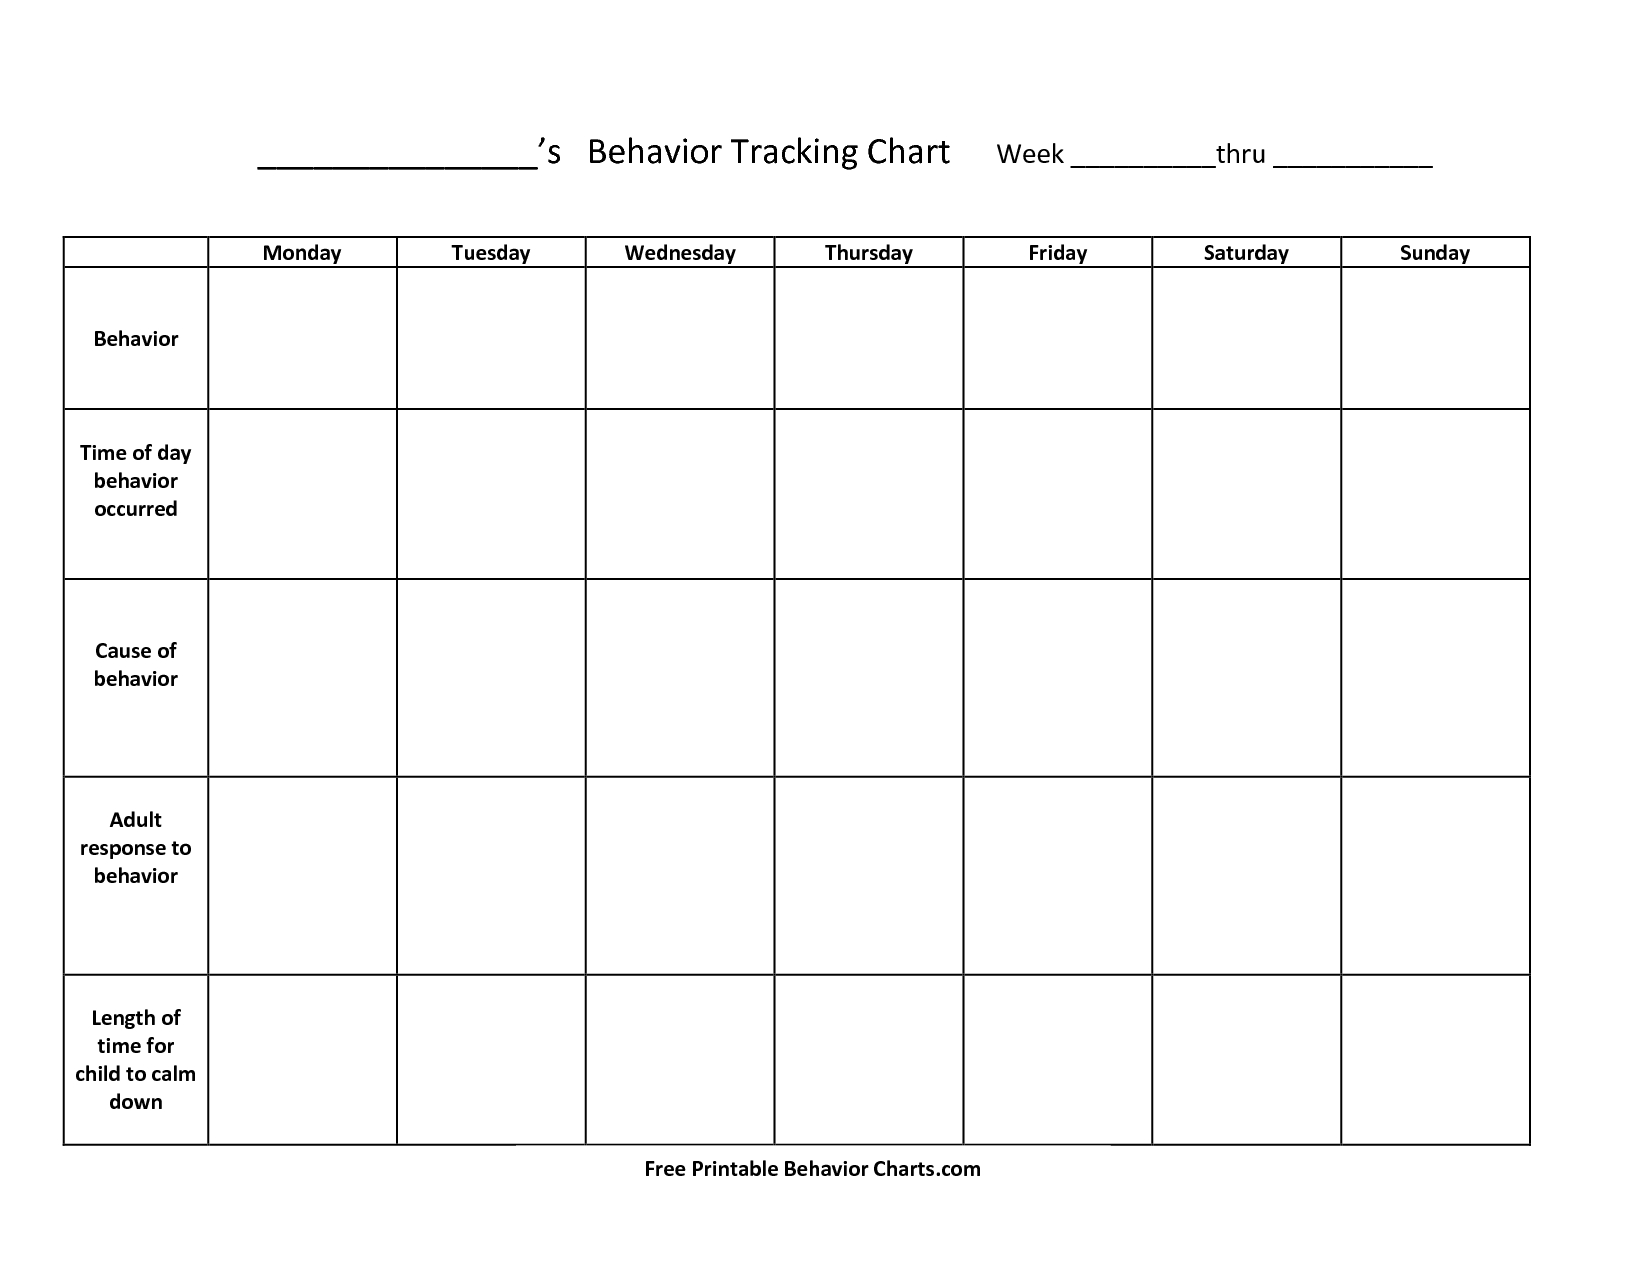 Free Printable Behavior Charts For Teachers | Free Printable